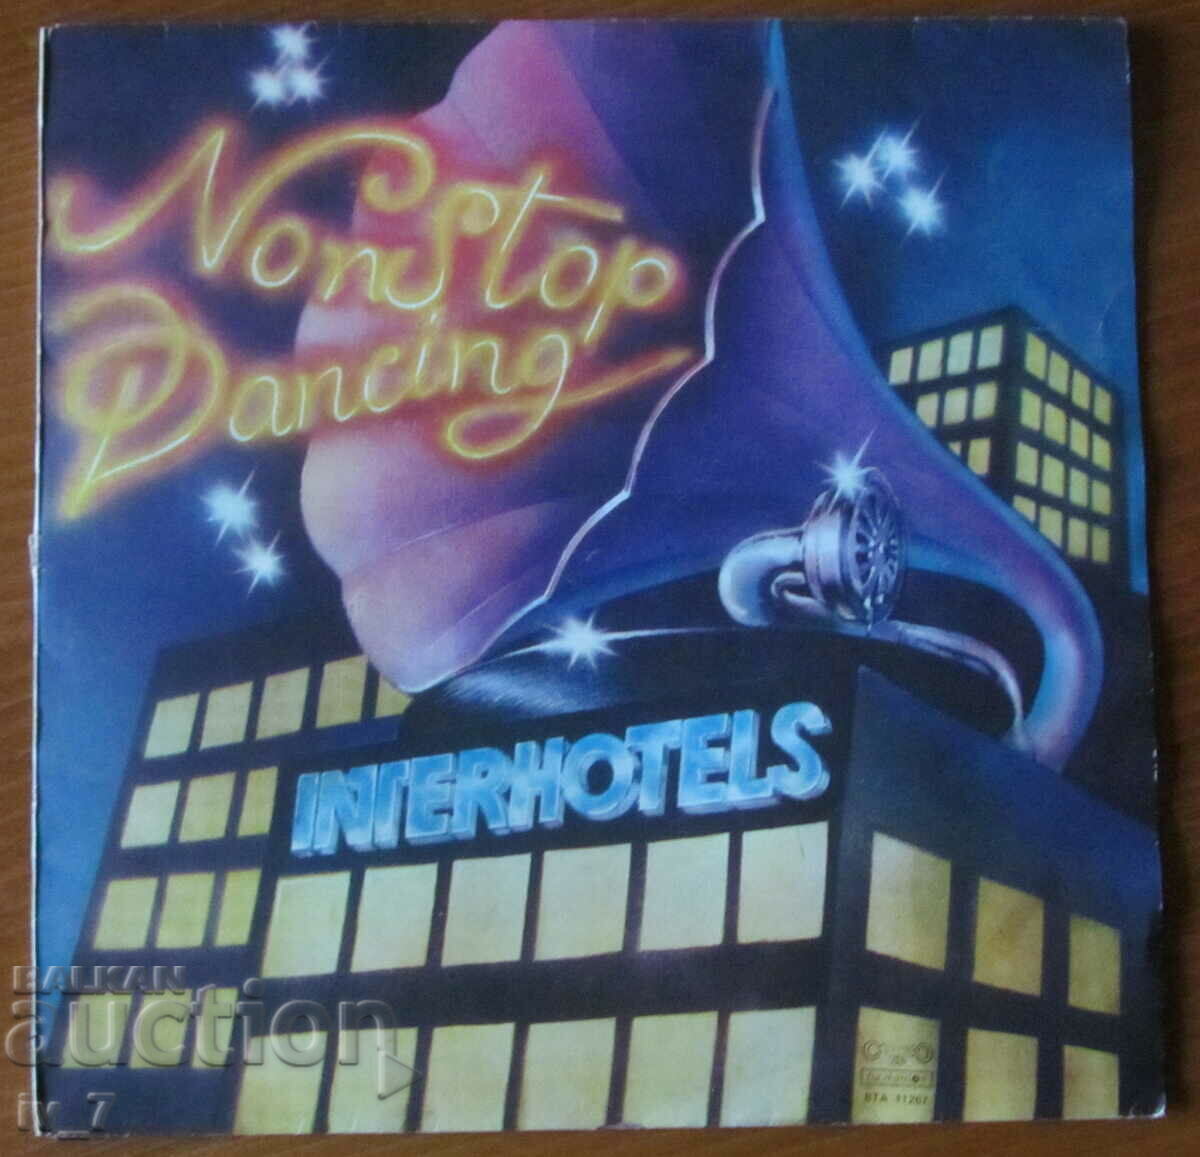 RECORD-Interhotels-"Non stop dance floor", large format